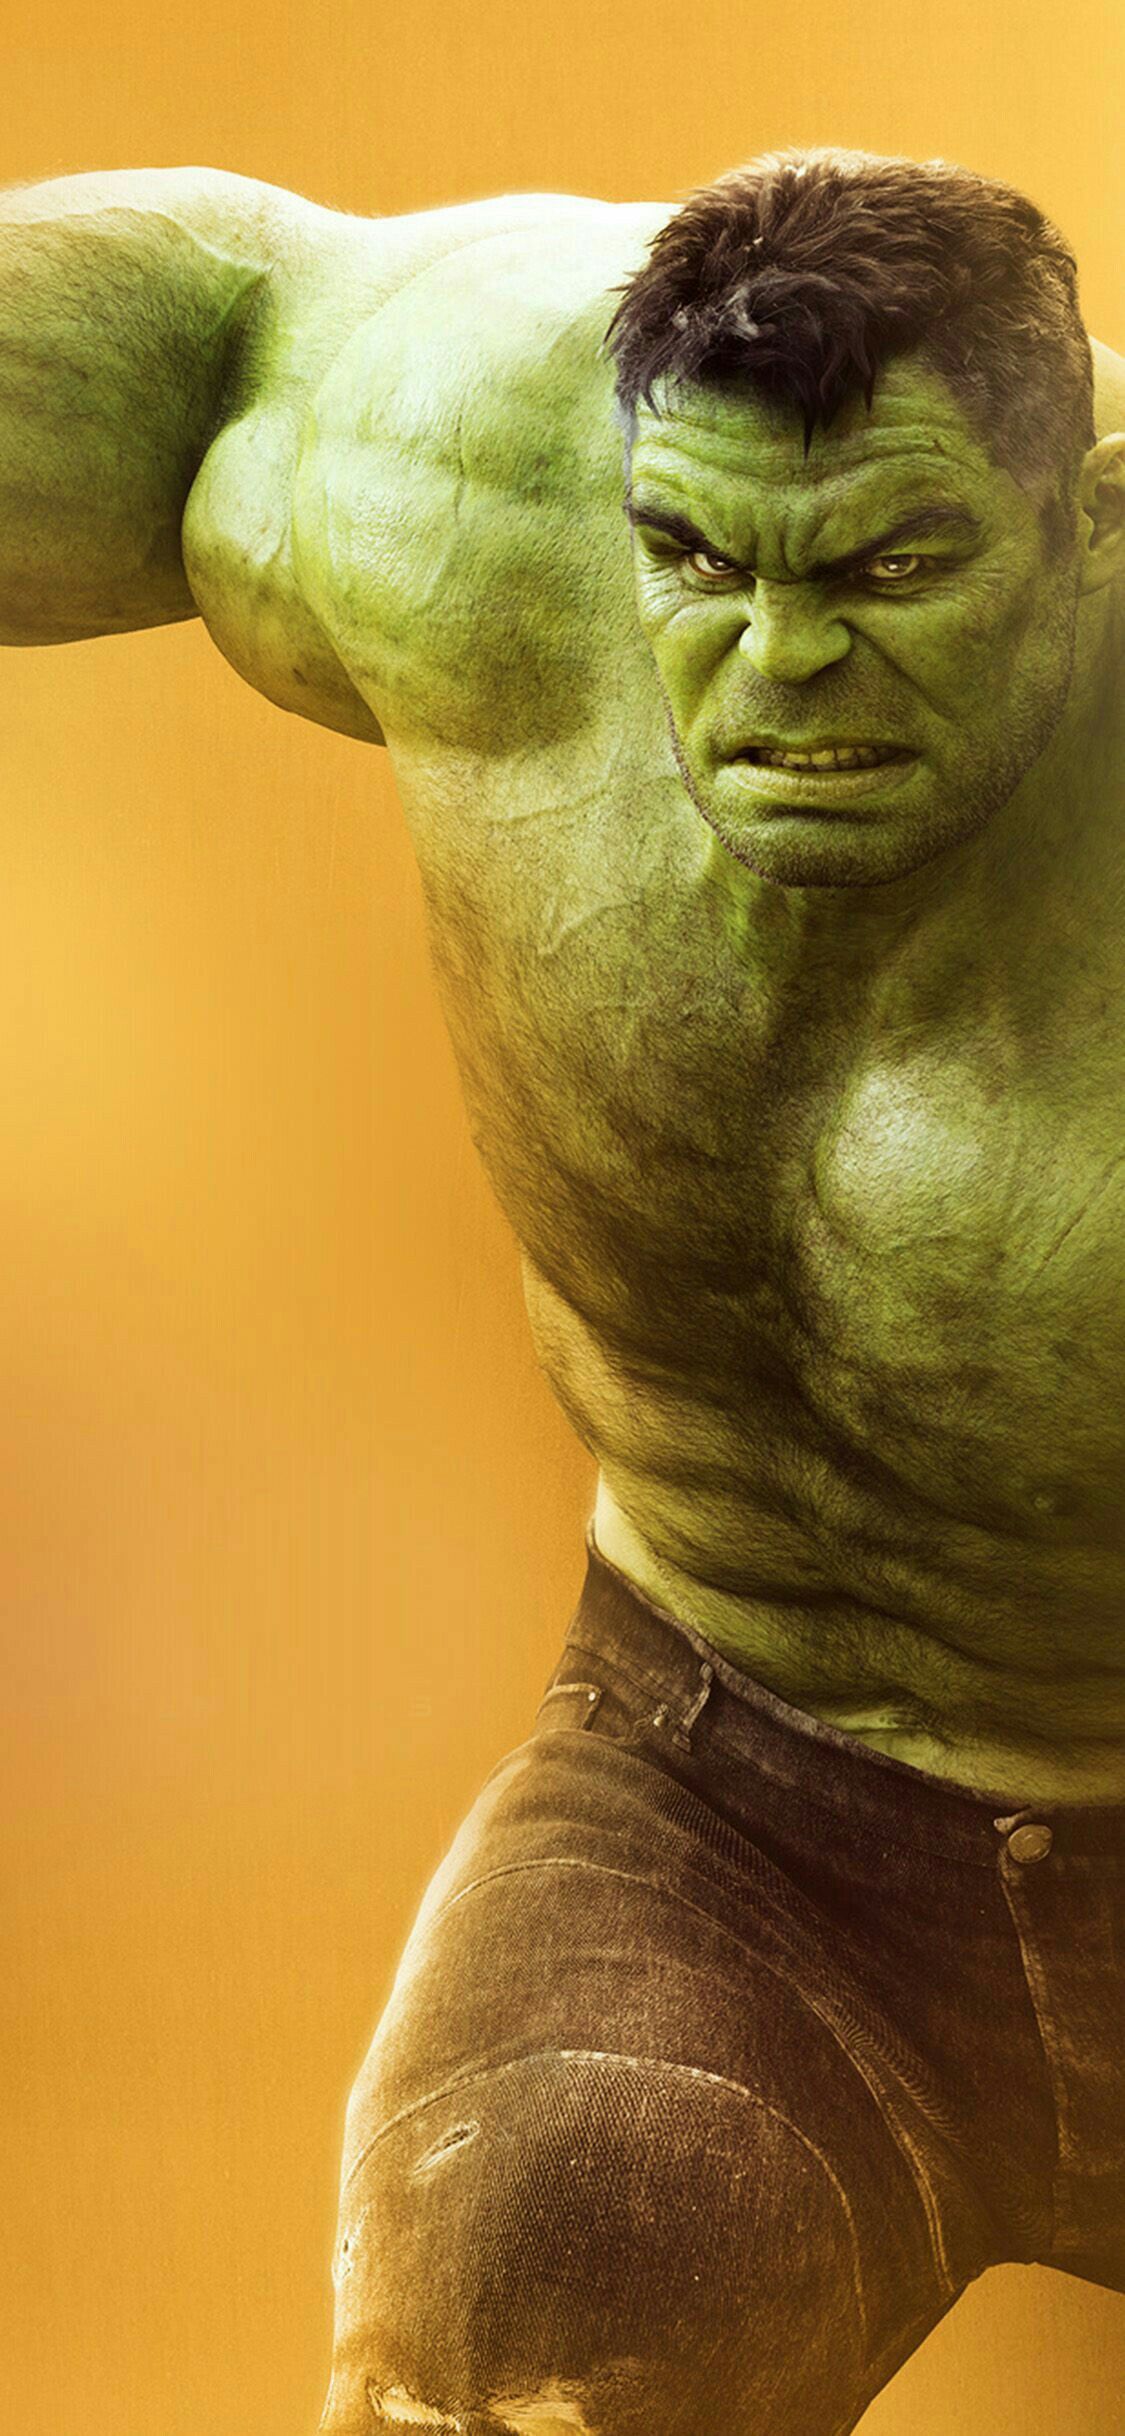 HULK PHOTO. Hulk marvel, Marvel heroes, Hulk